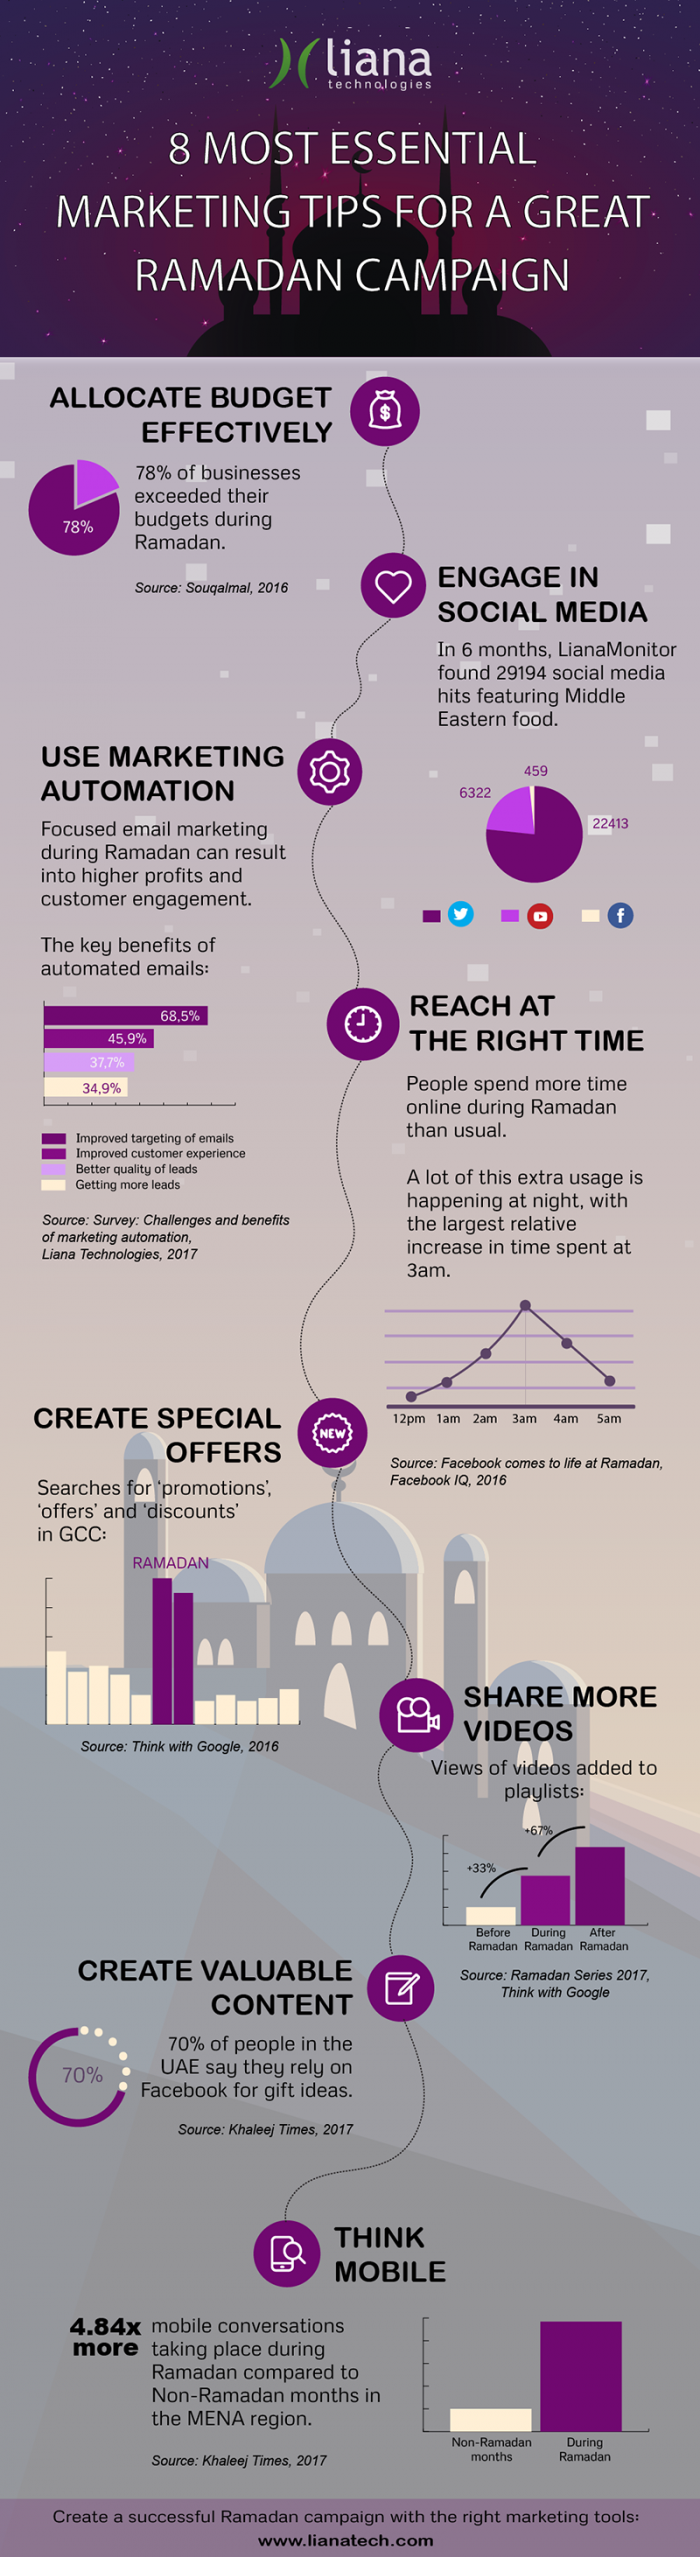 Ramadan marketing tips infographic by Liana Technologies